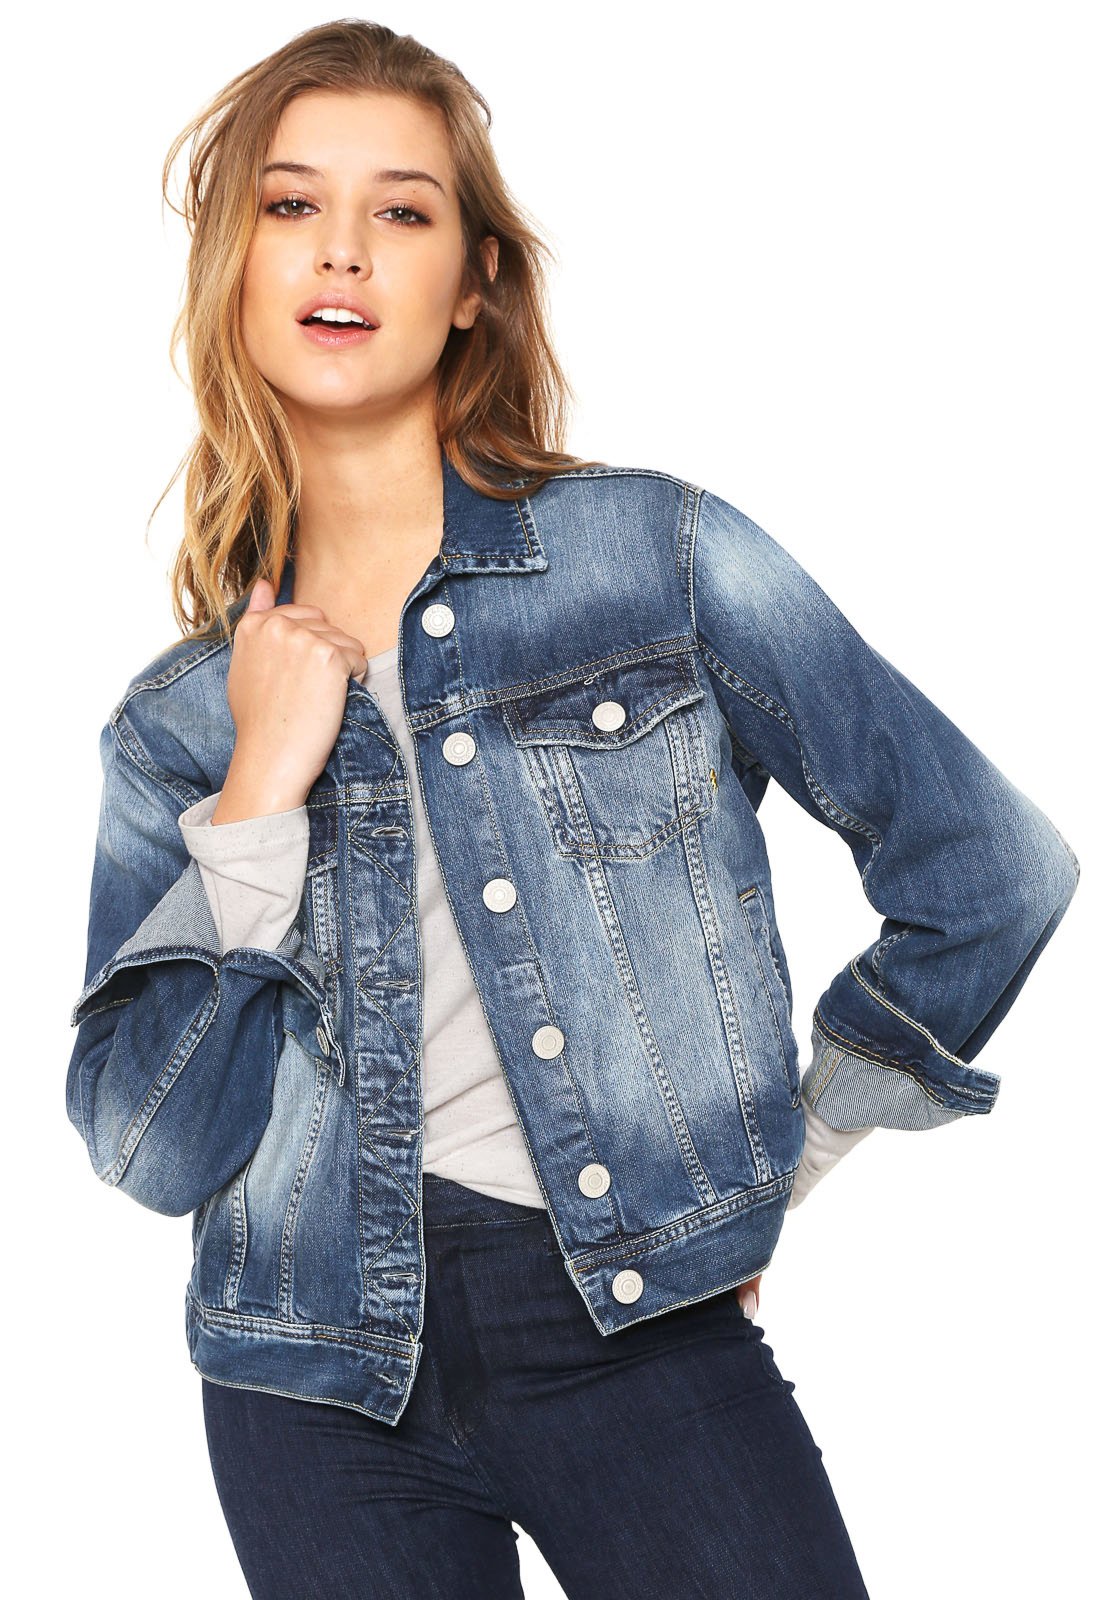 jaqueta jeans feminina zoomp